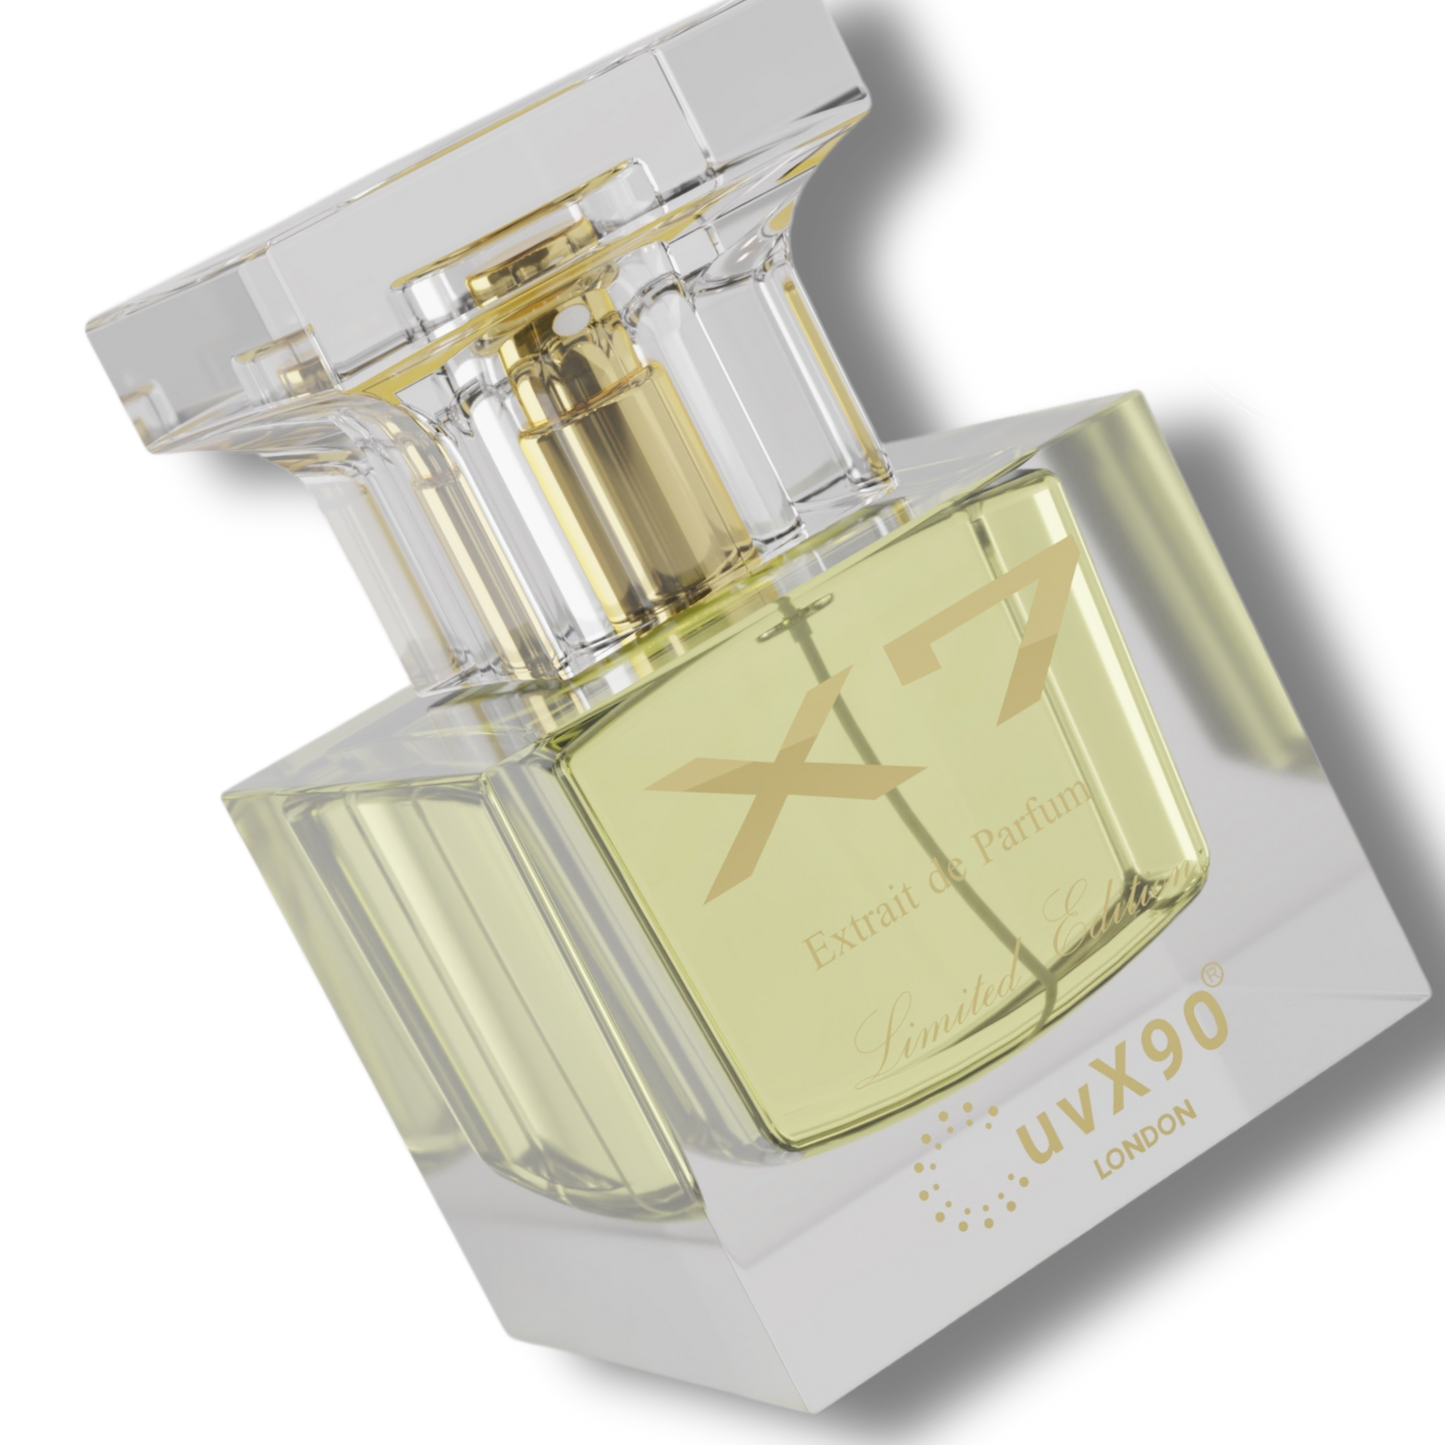 X7 Parfum Limited Edition (50ML)